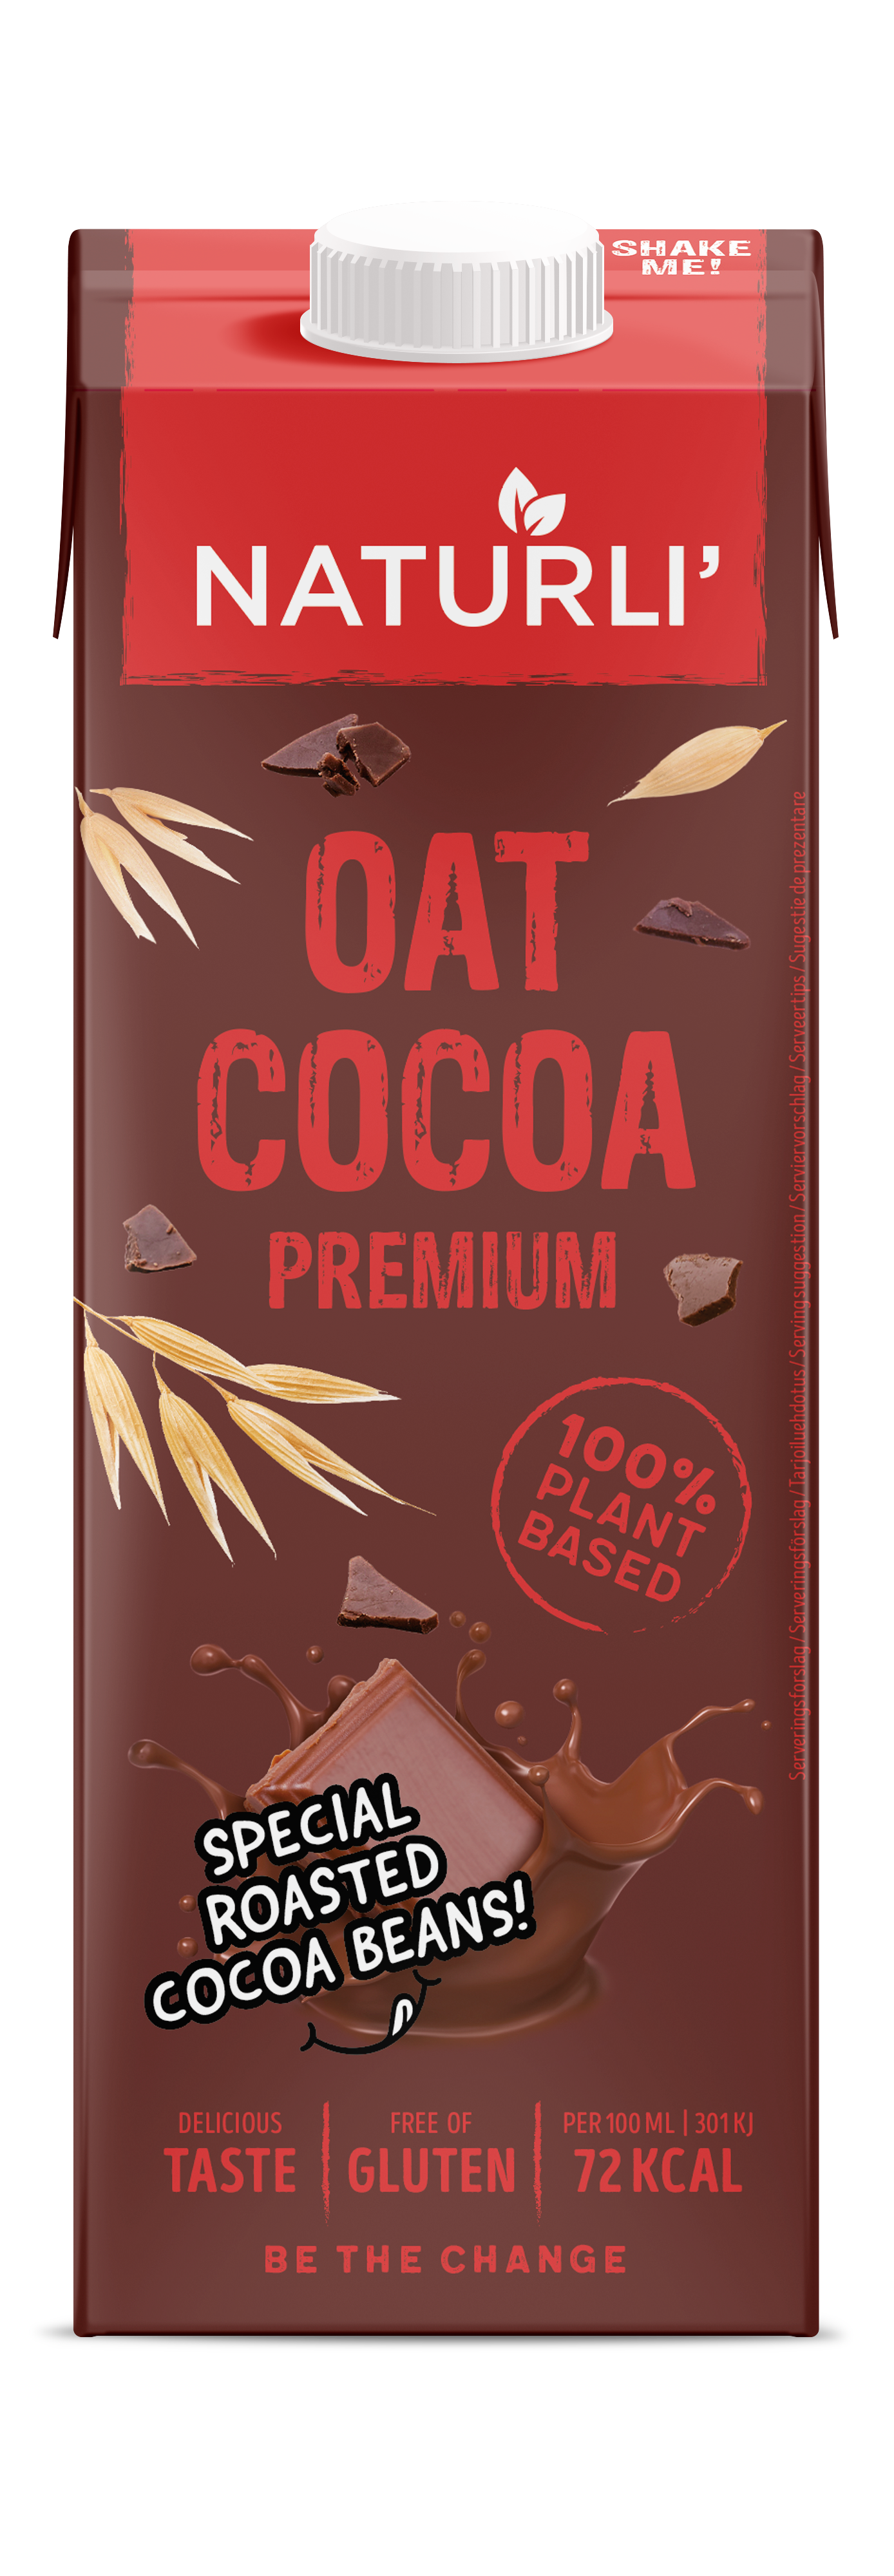 Oat Cocoa